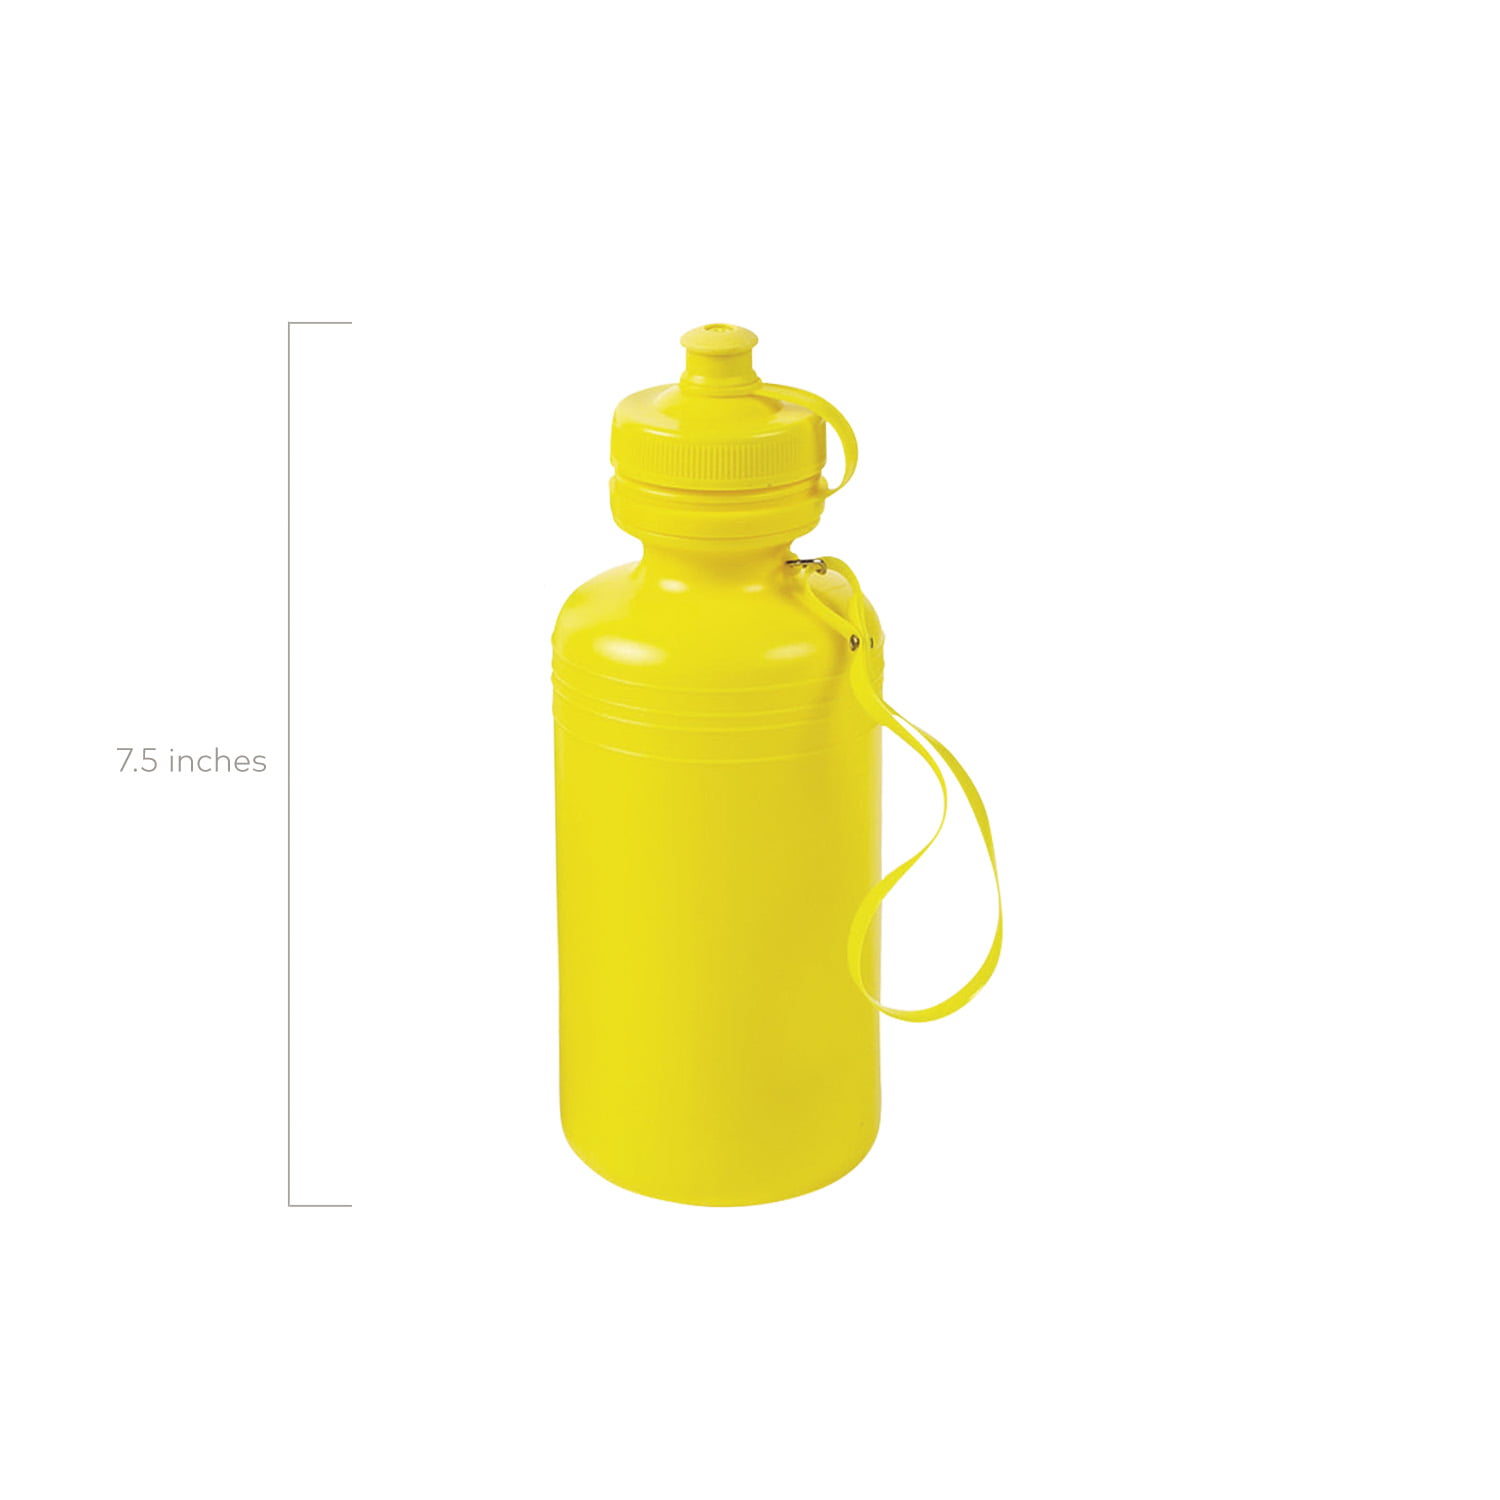 Fun Express Neon Sport Water Bottles - 12 Pieces